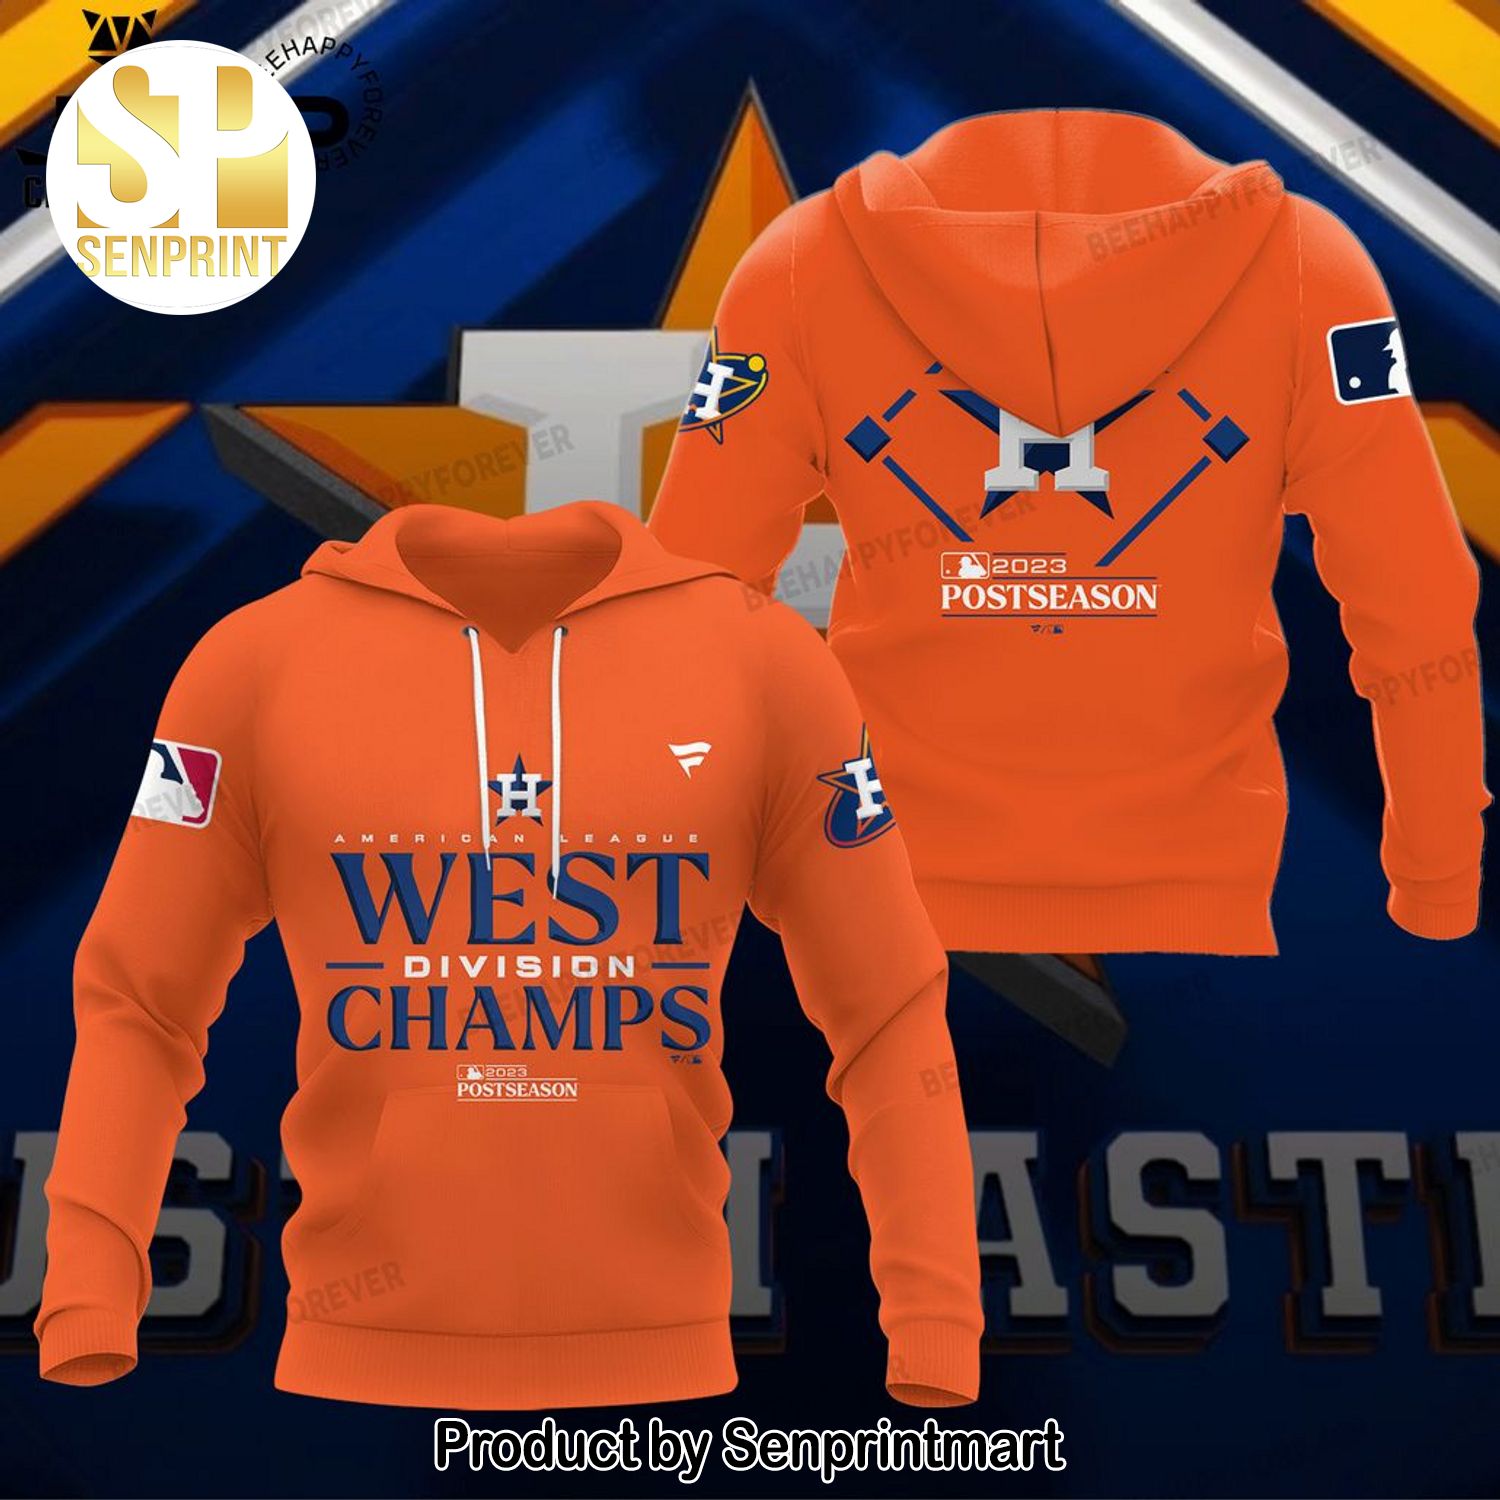 West Division Champions 2023 Postseason Logo Design On Sleevee Full Printed Shirt